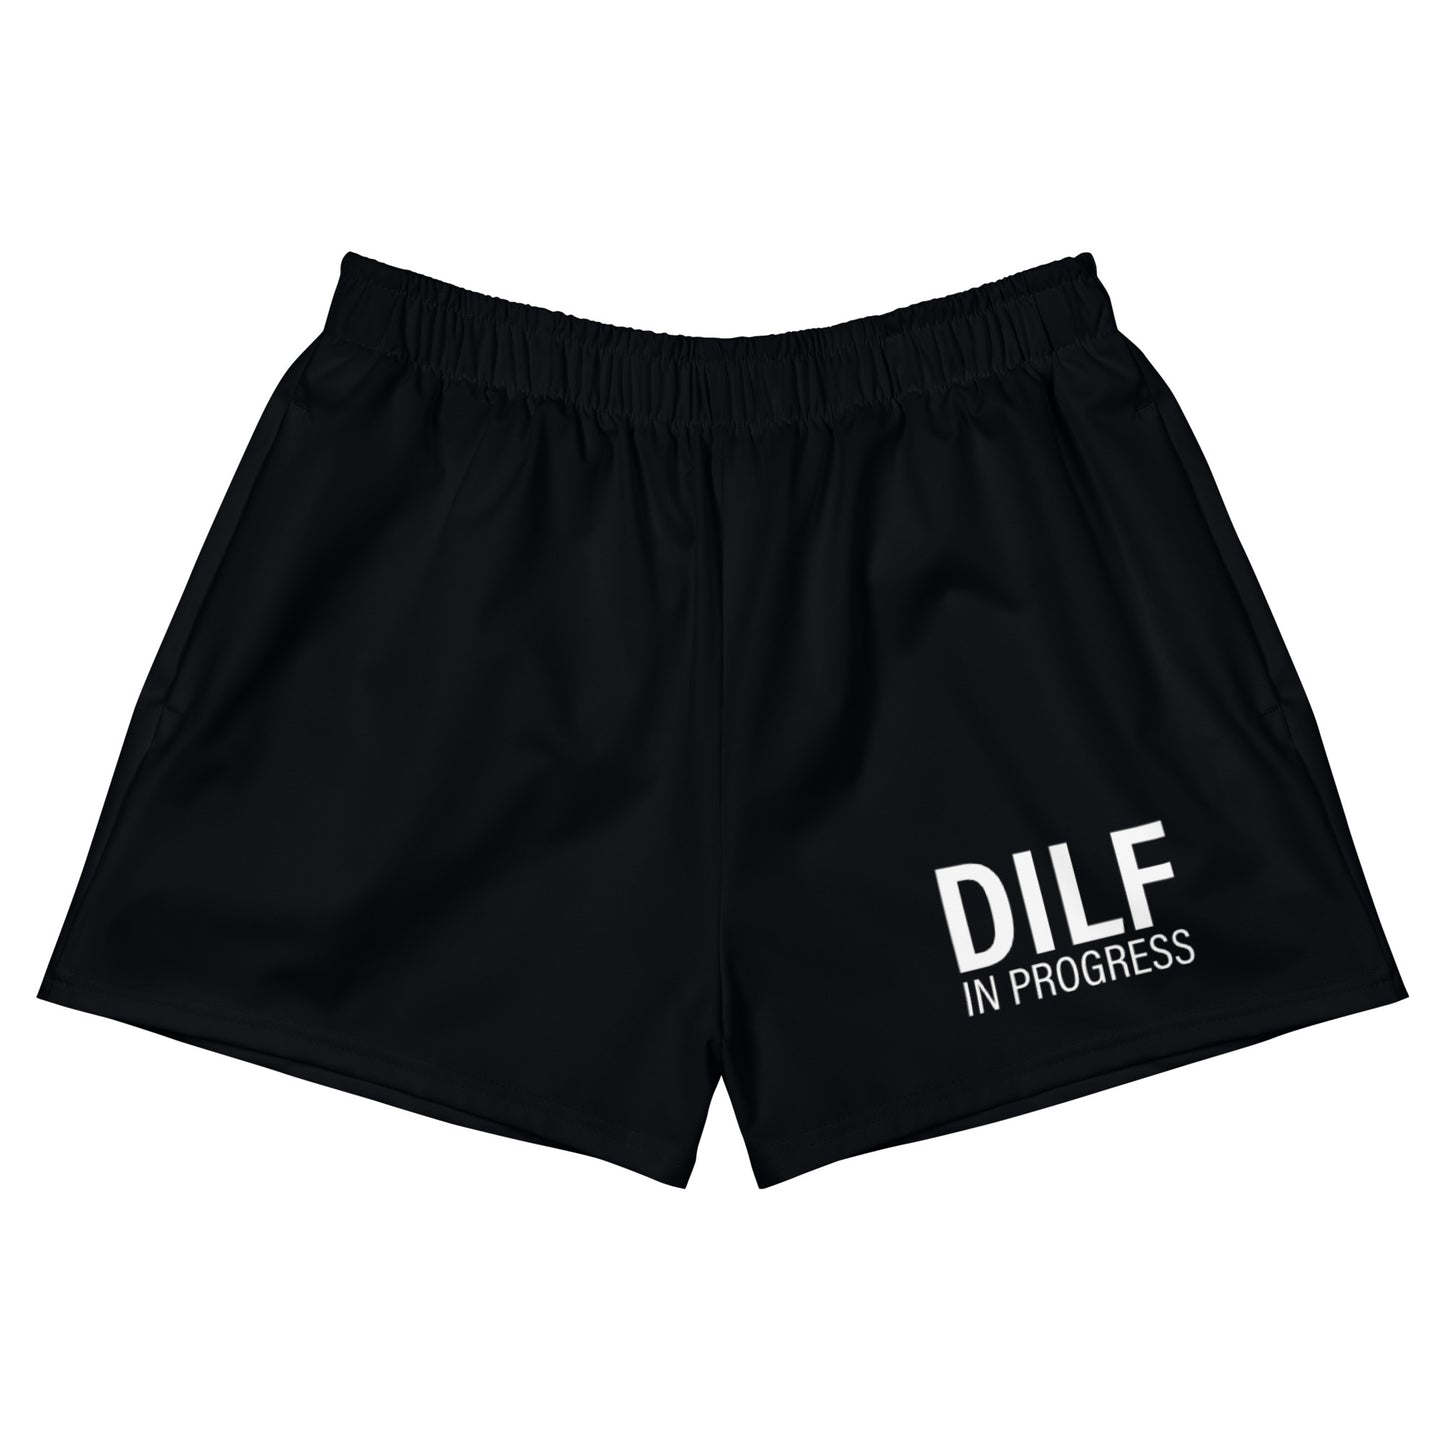 DILF in Progress Athletic Shorts (Short)